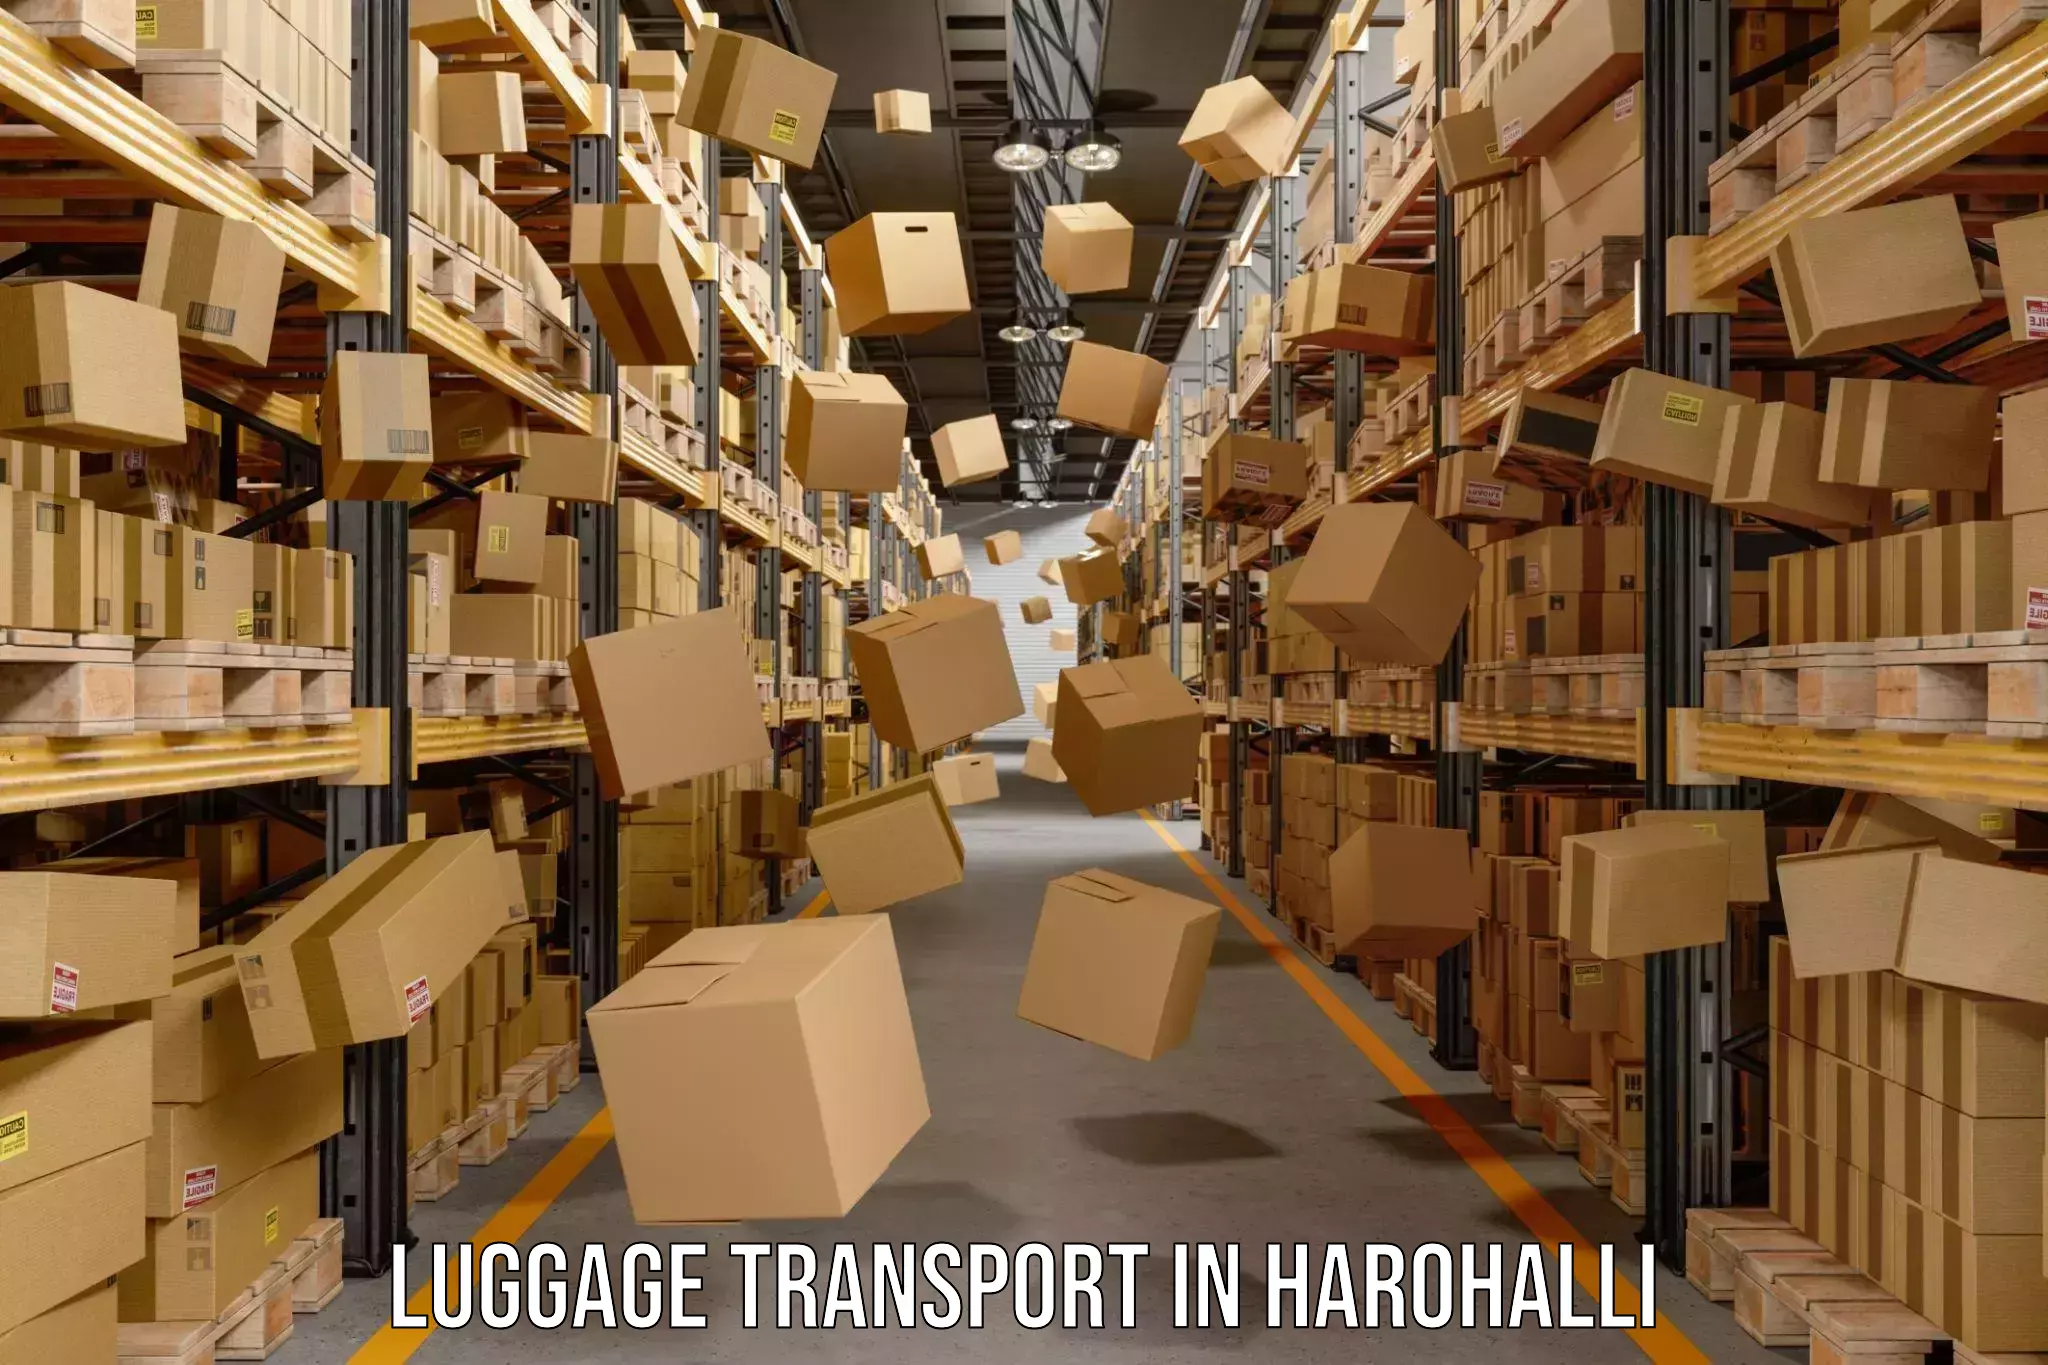 Luggage transport rates in Harohalli